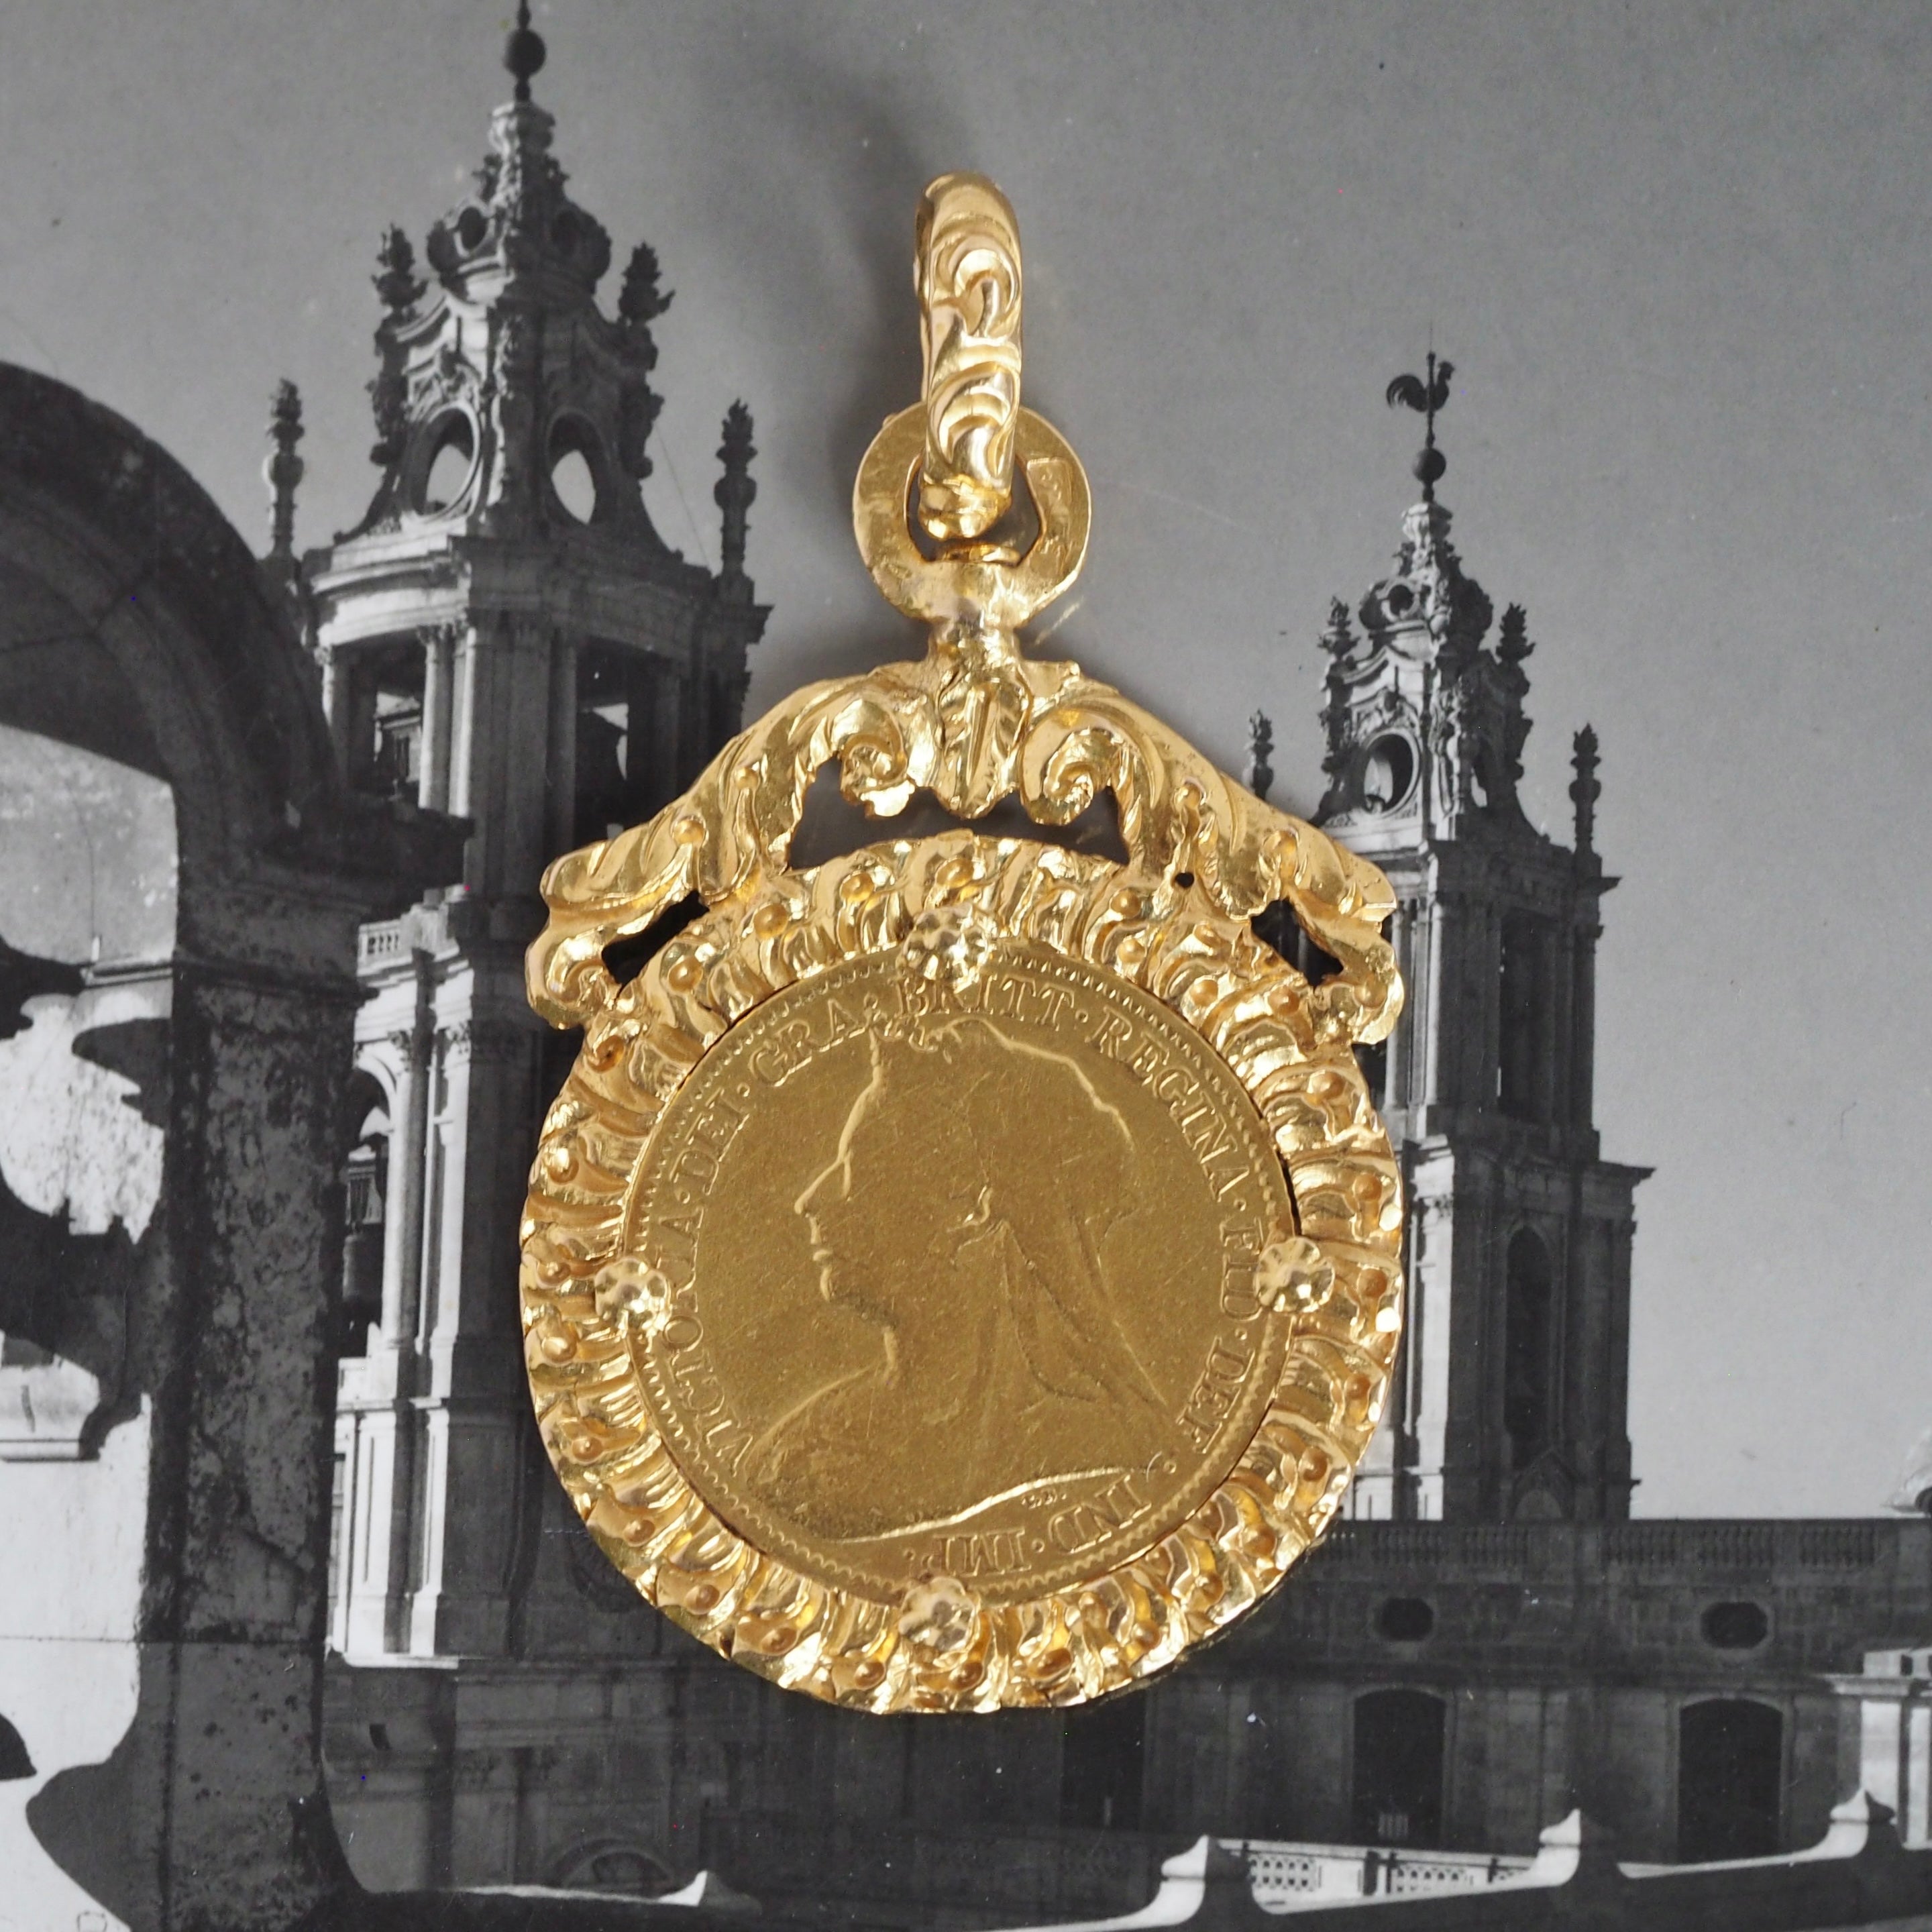 Antique Portuguese 22k Gold Queen Victoria Sovereign Coin Pendant c. 1895